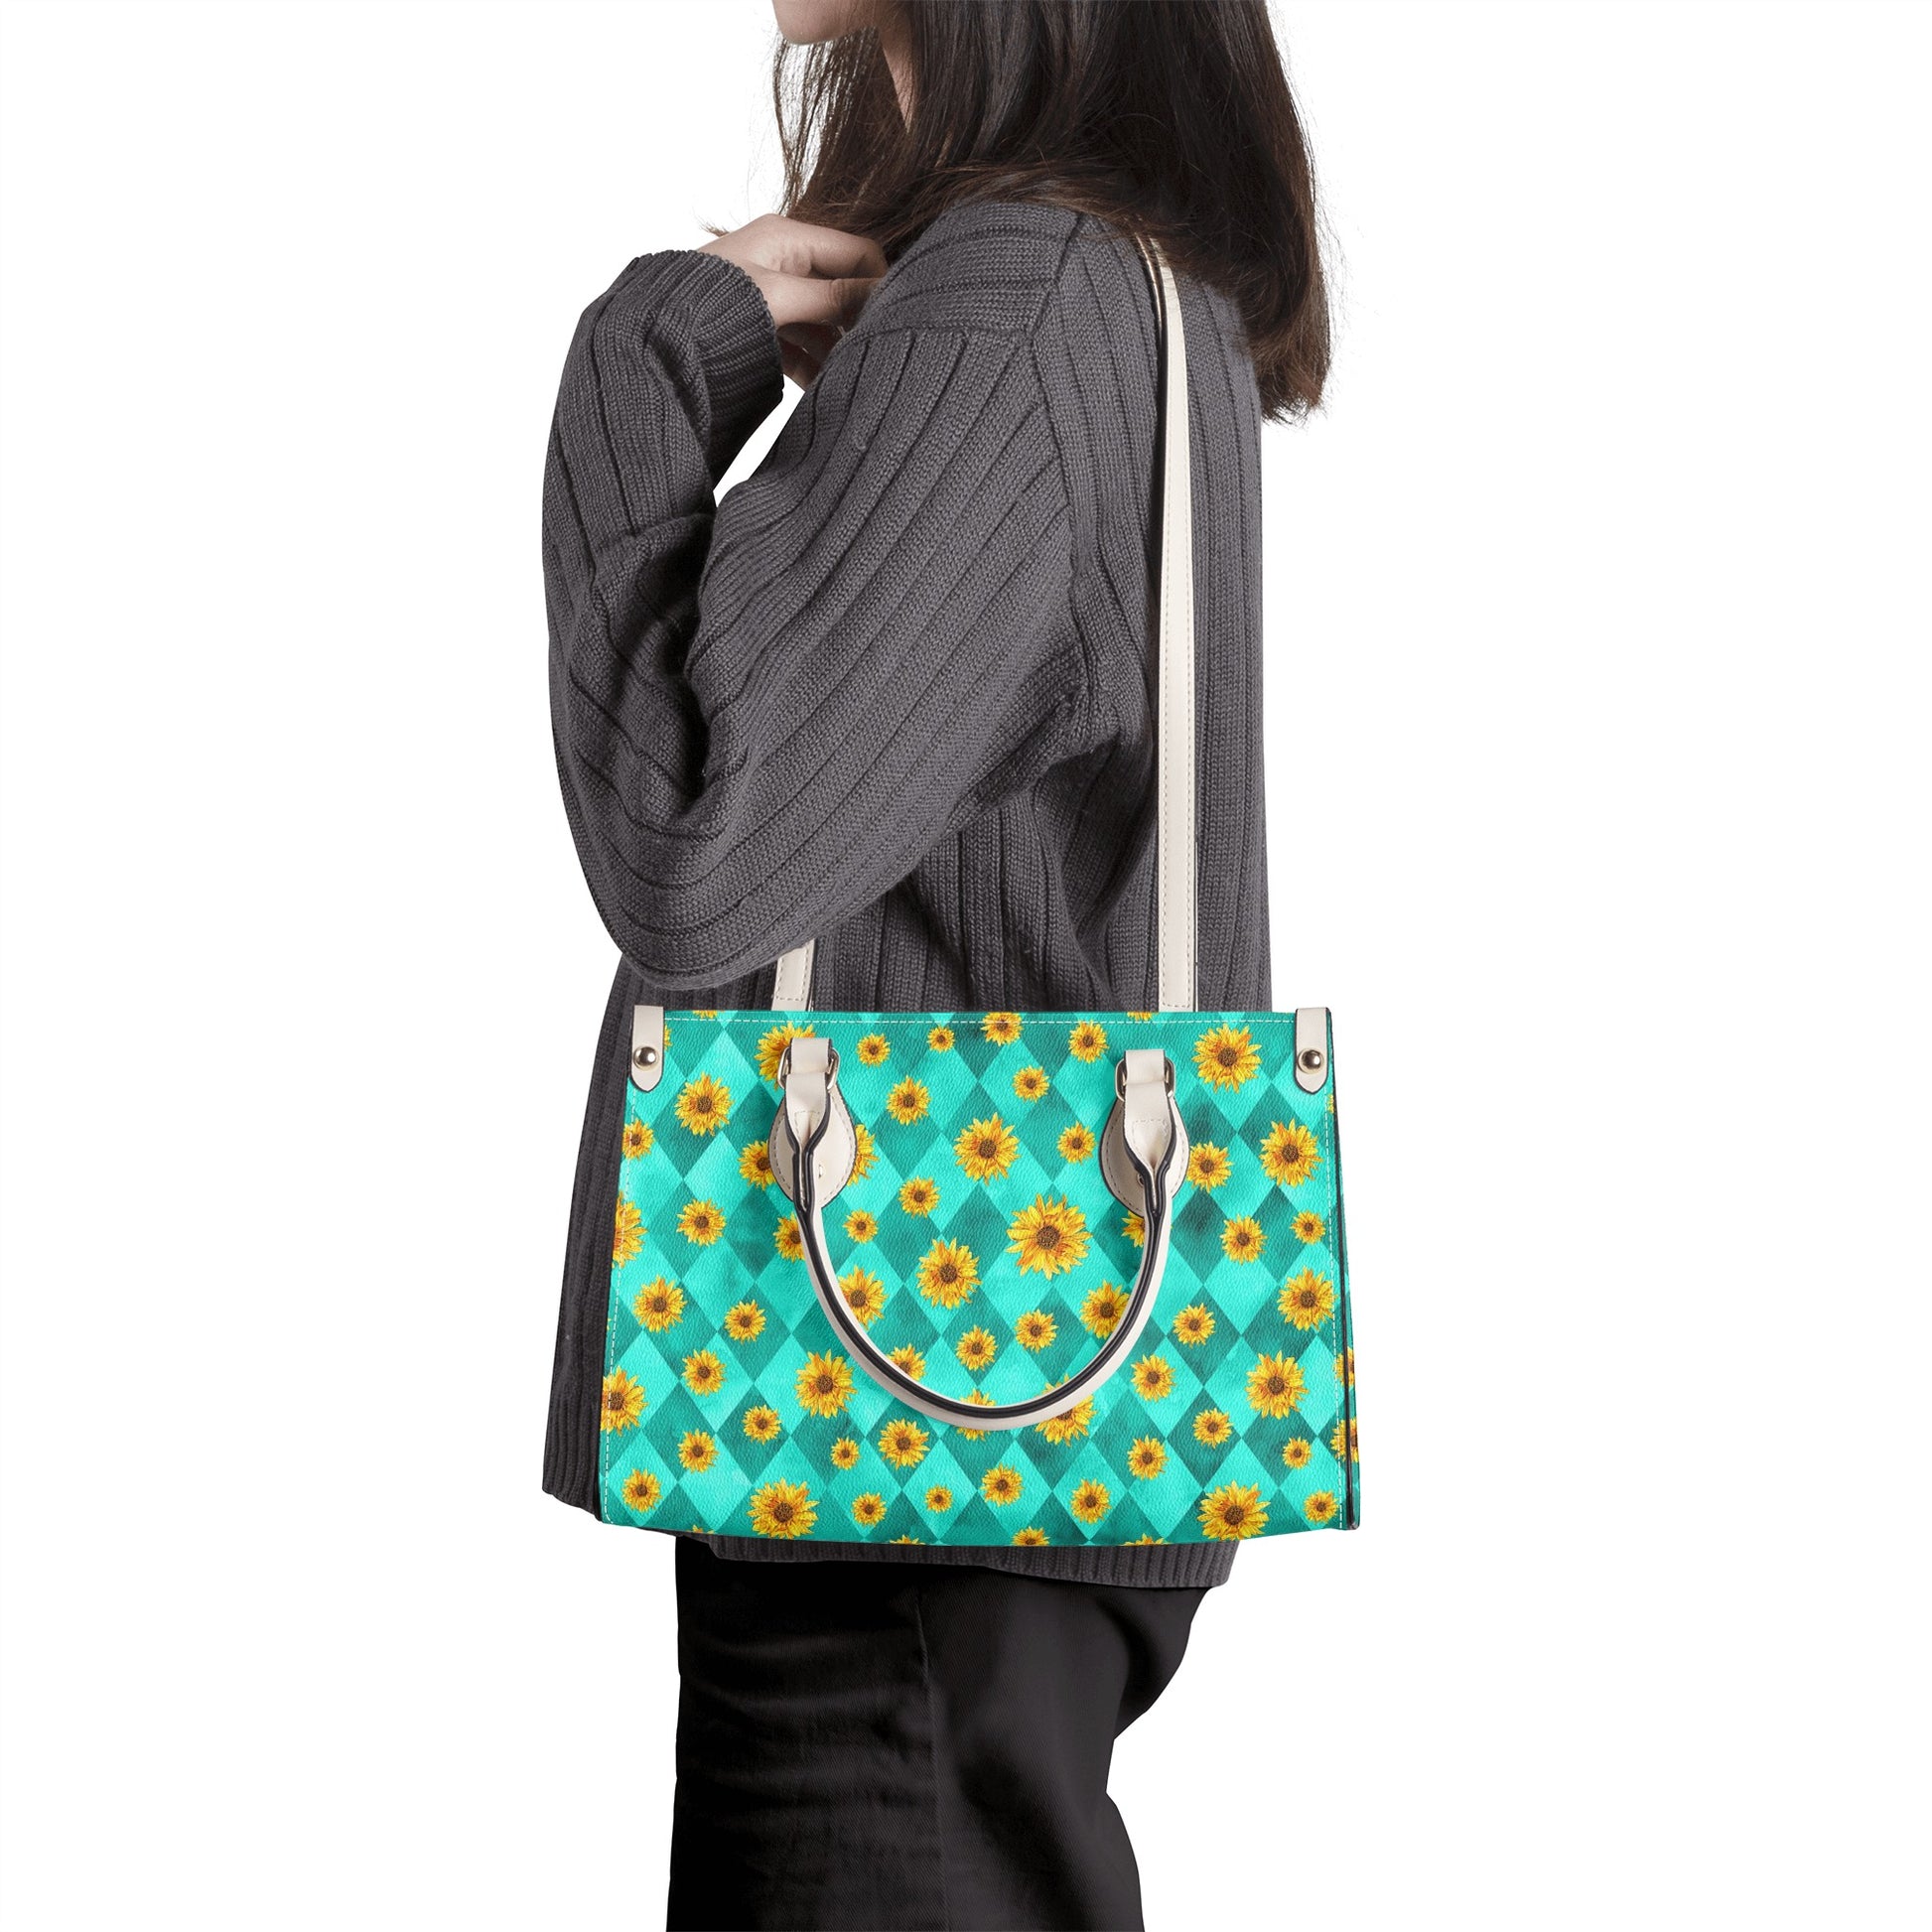 Luxury Women PU Handbag With Shoulder Strap - EvoFash 